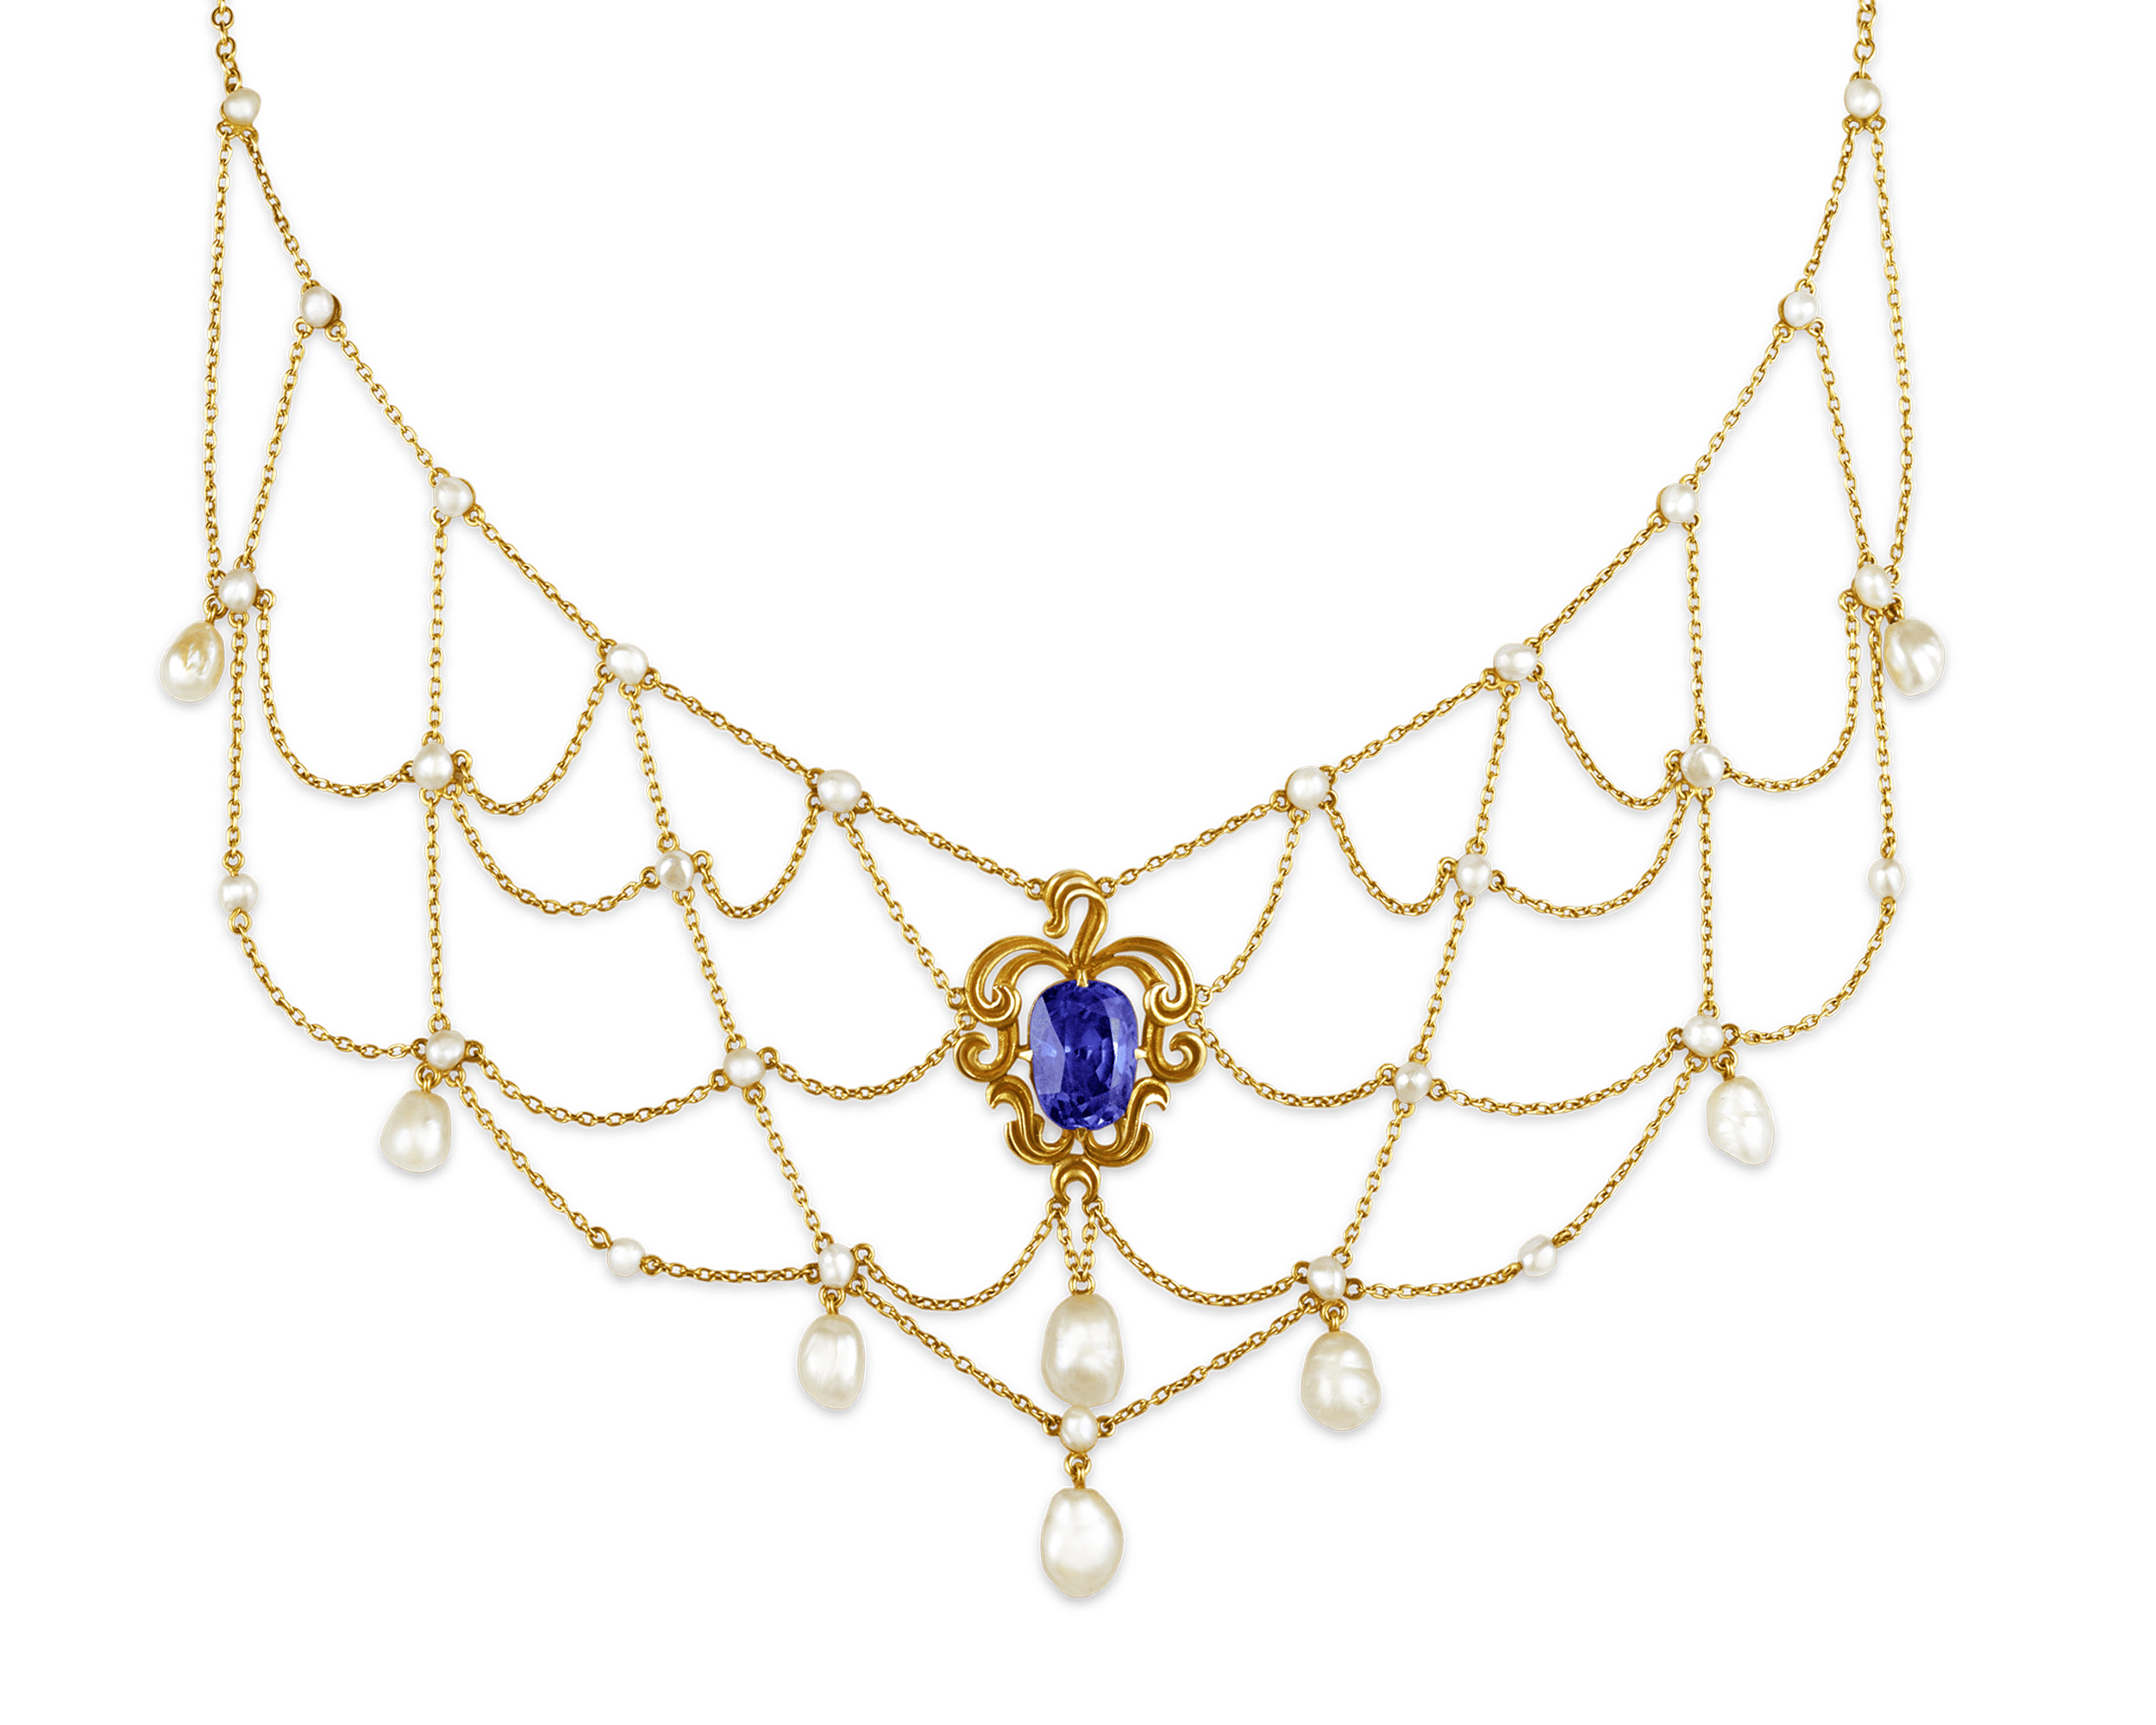 Untreated Burma Sapphire Bib Necklace, 6.07 Carats